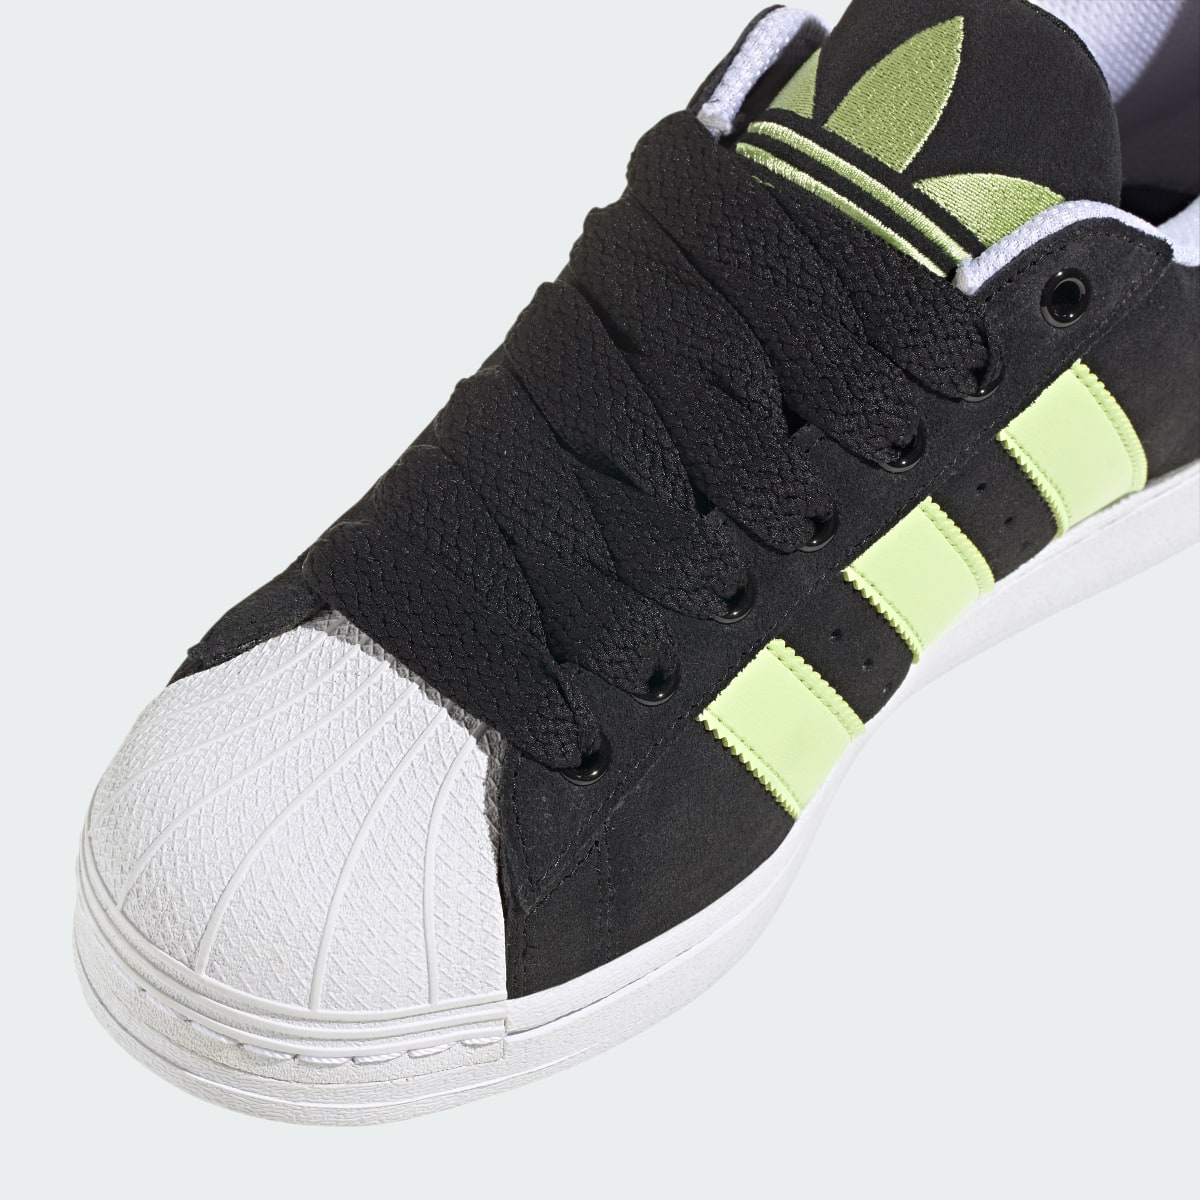 Adidas Superstar Shoes. 11